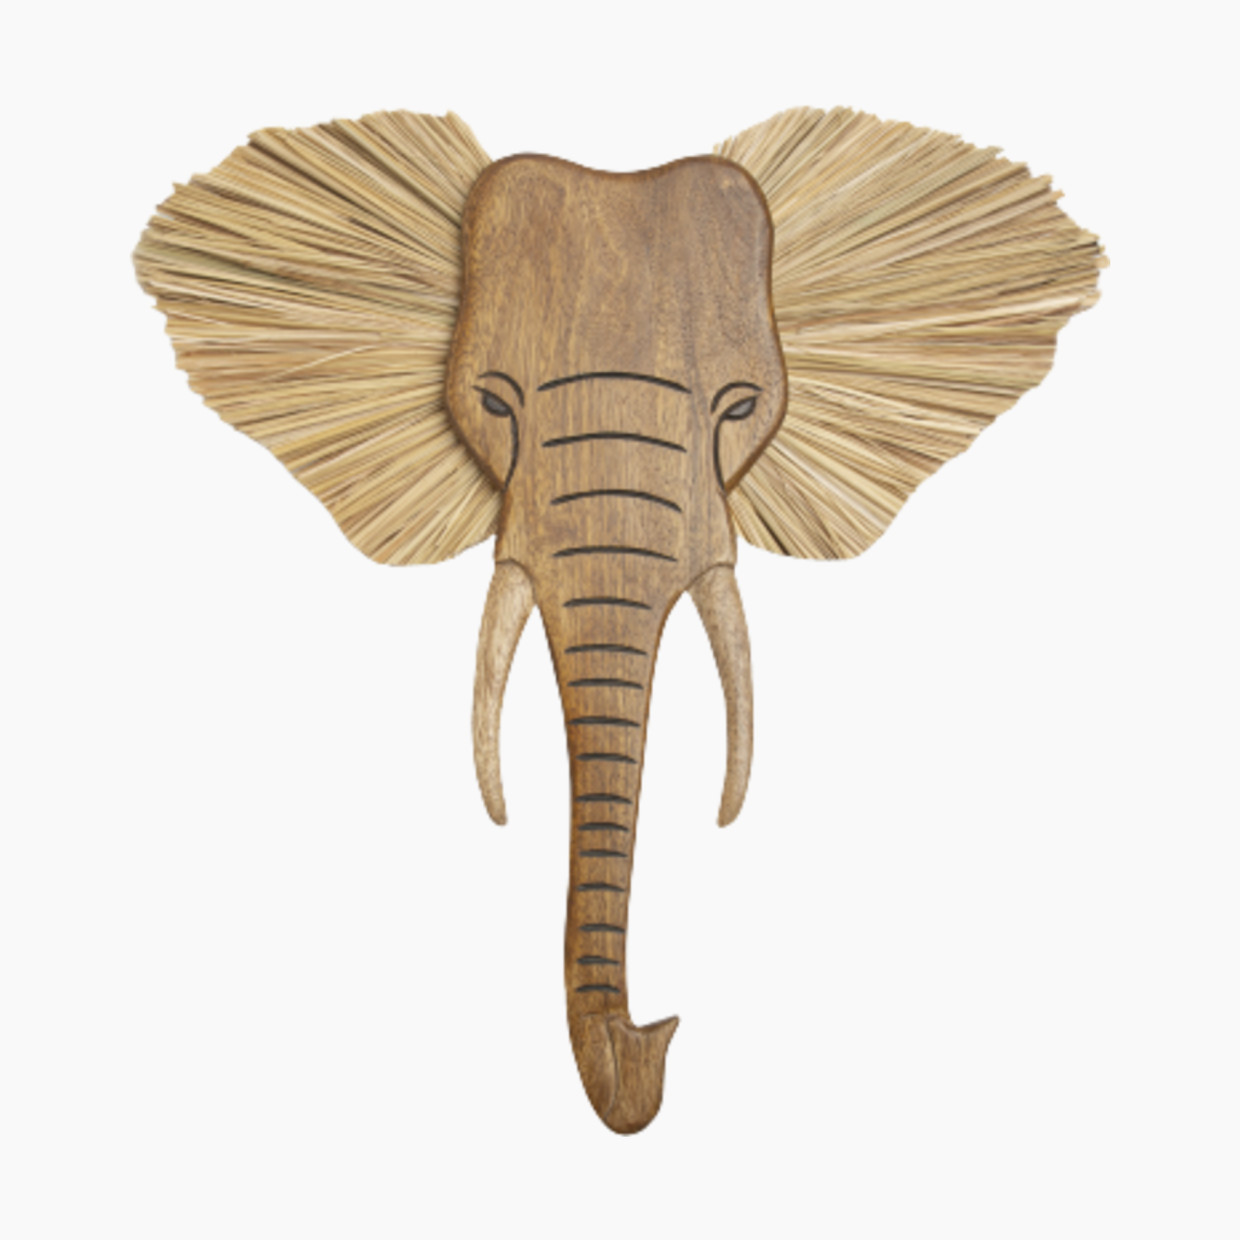 Crane Baby Handcrafted Wood Wall Decor - Elephant.